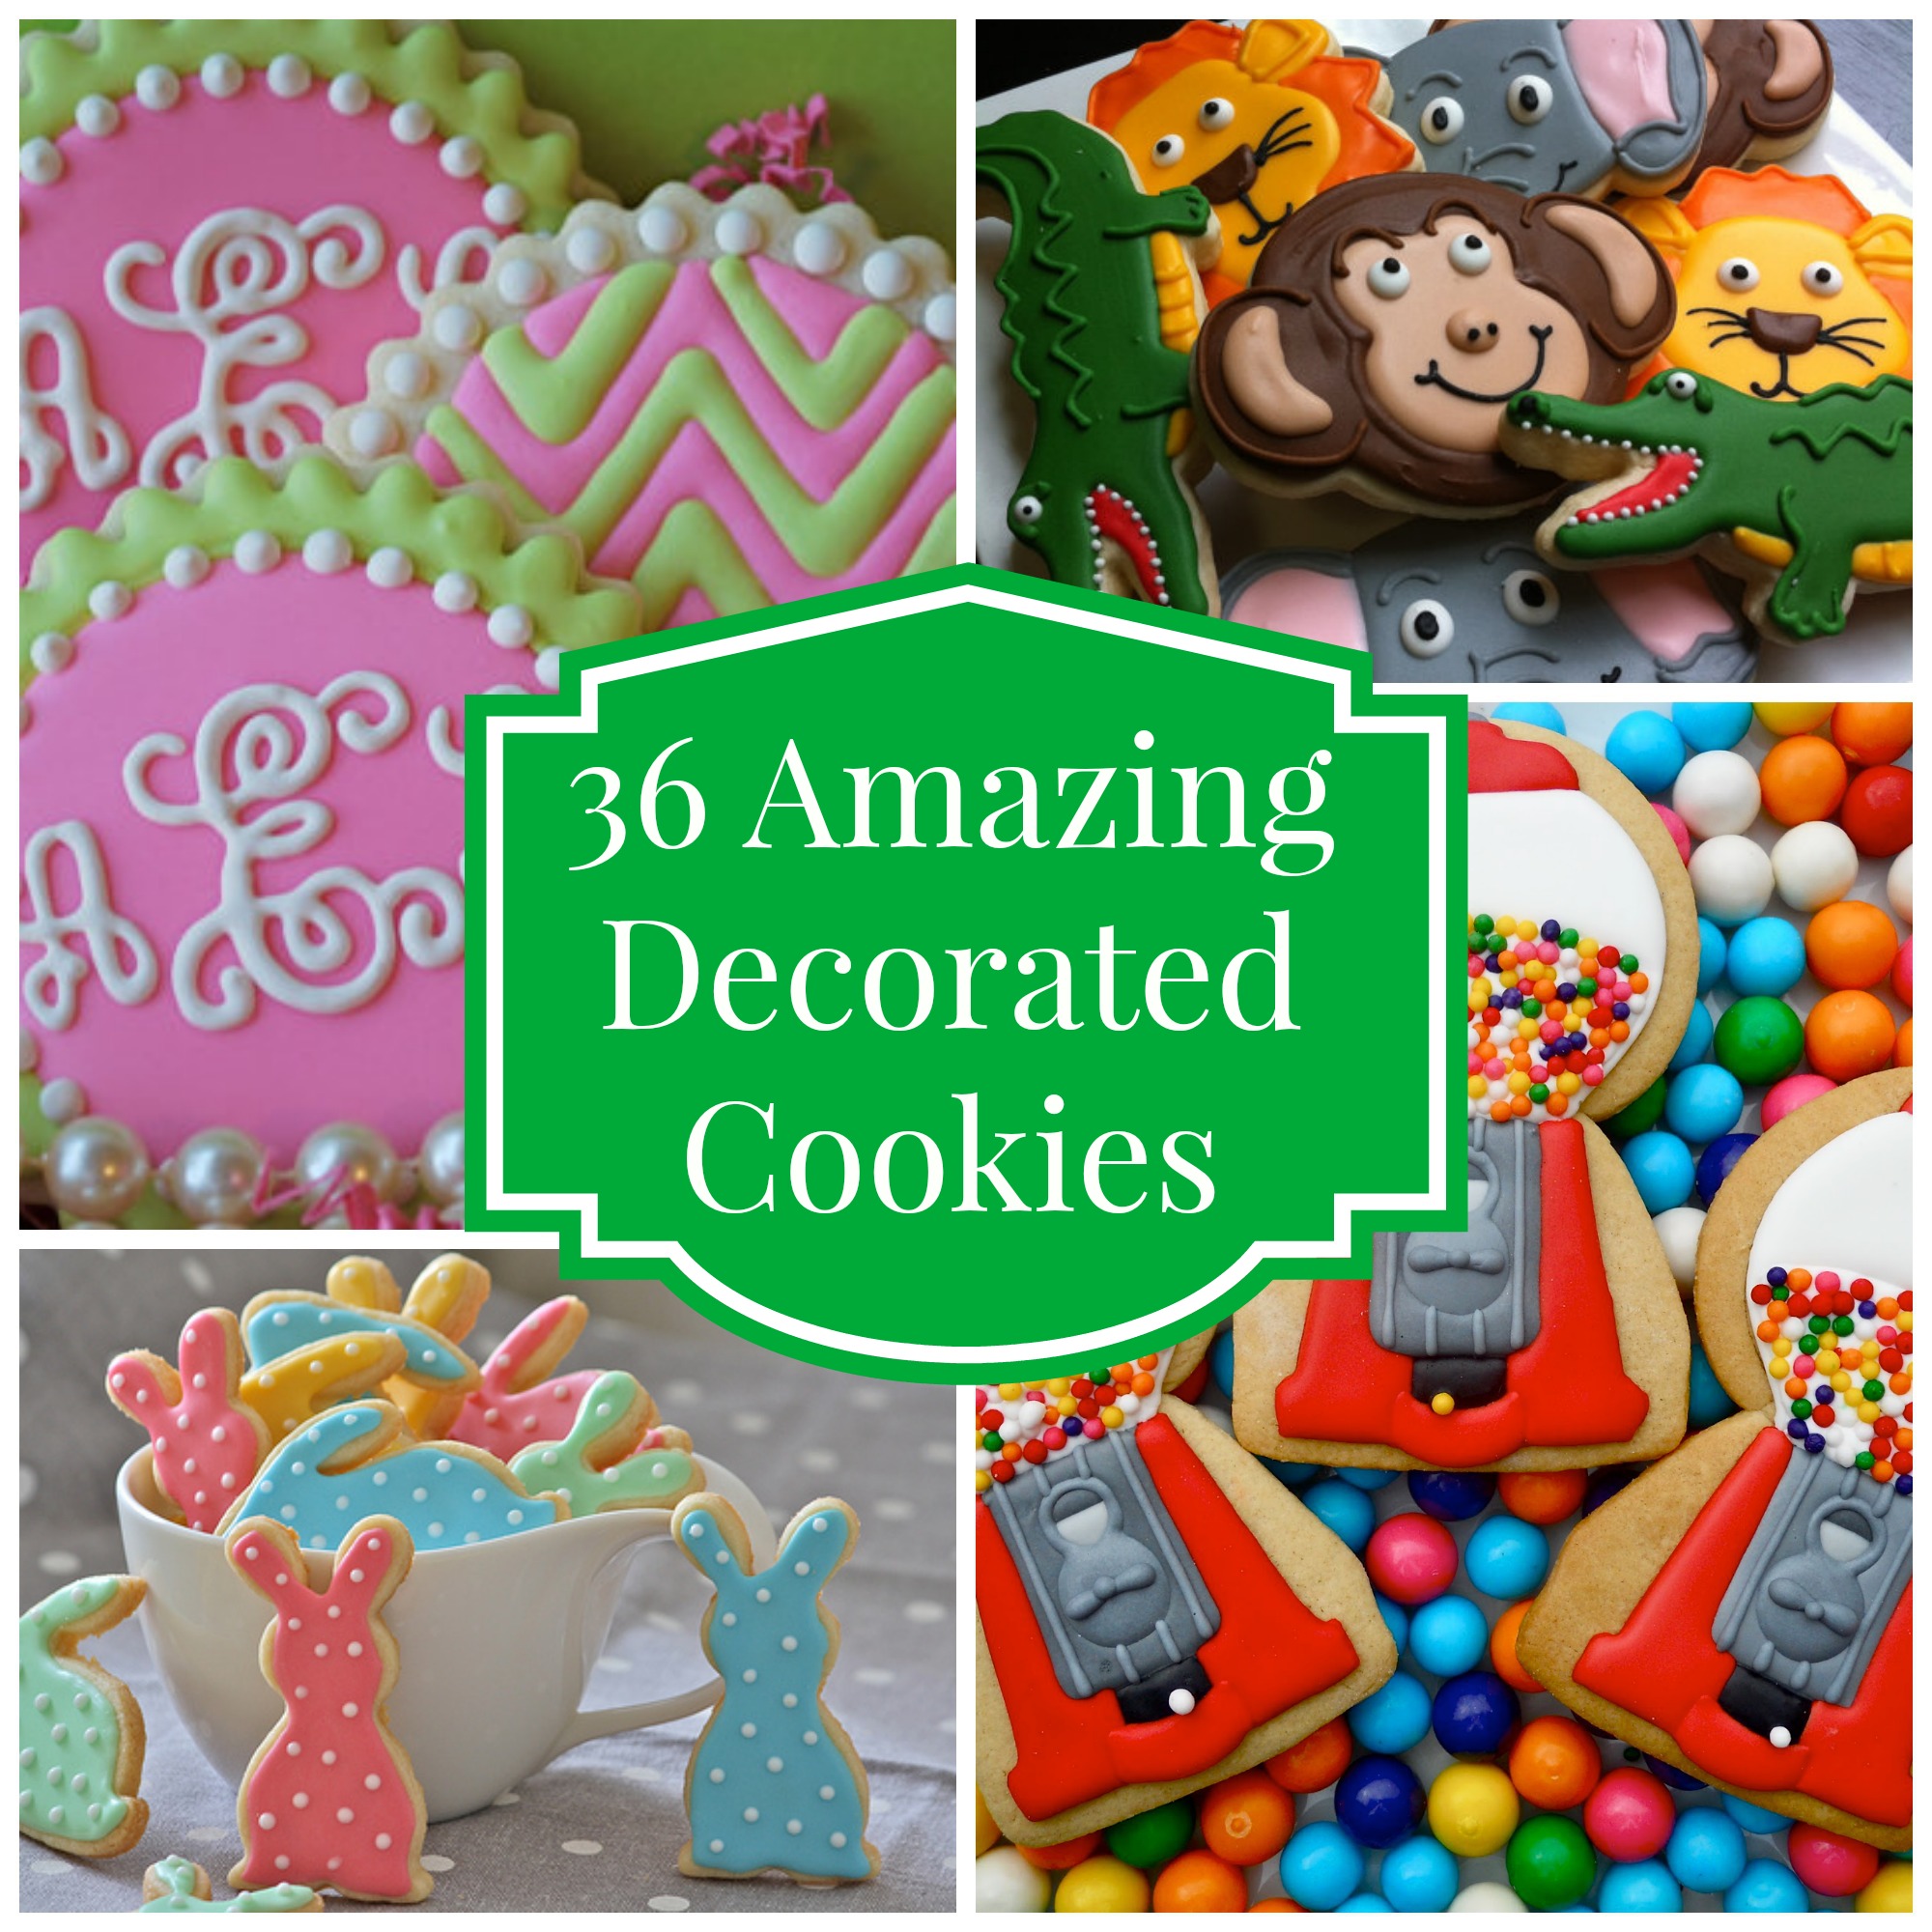 36 Amazing Decorated Cookies